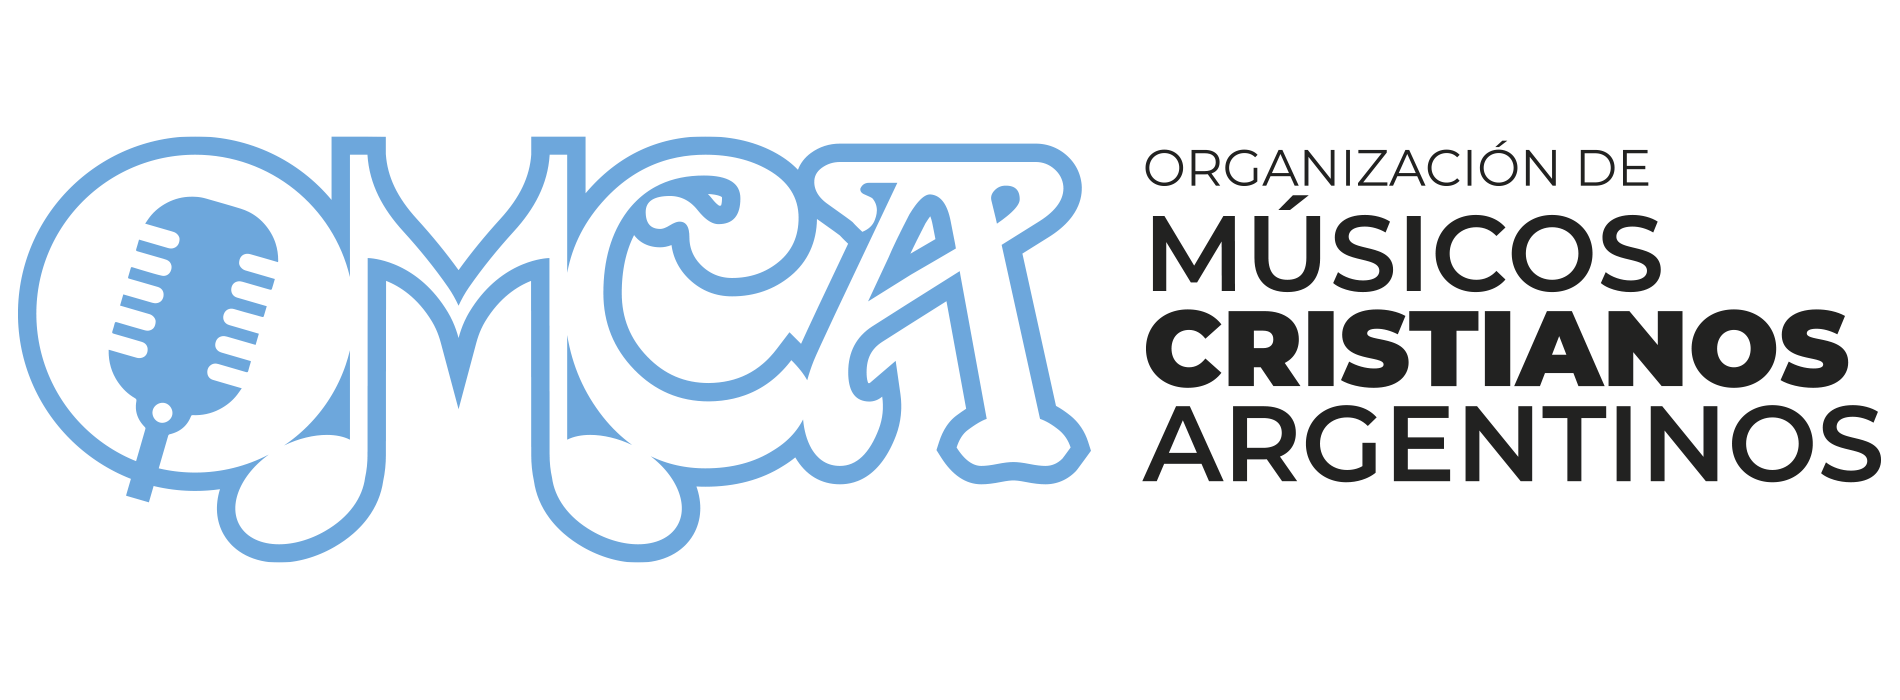 Organización de Músicos Cristianos Argentinos